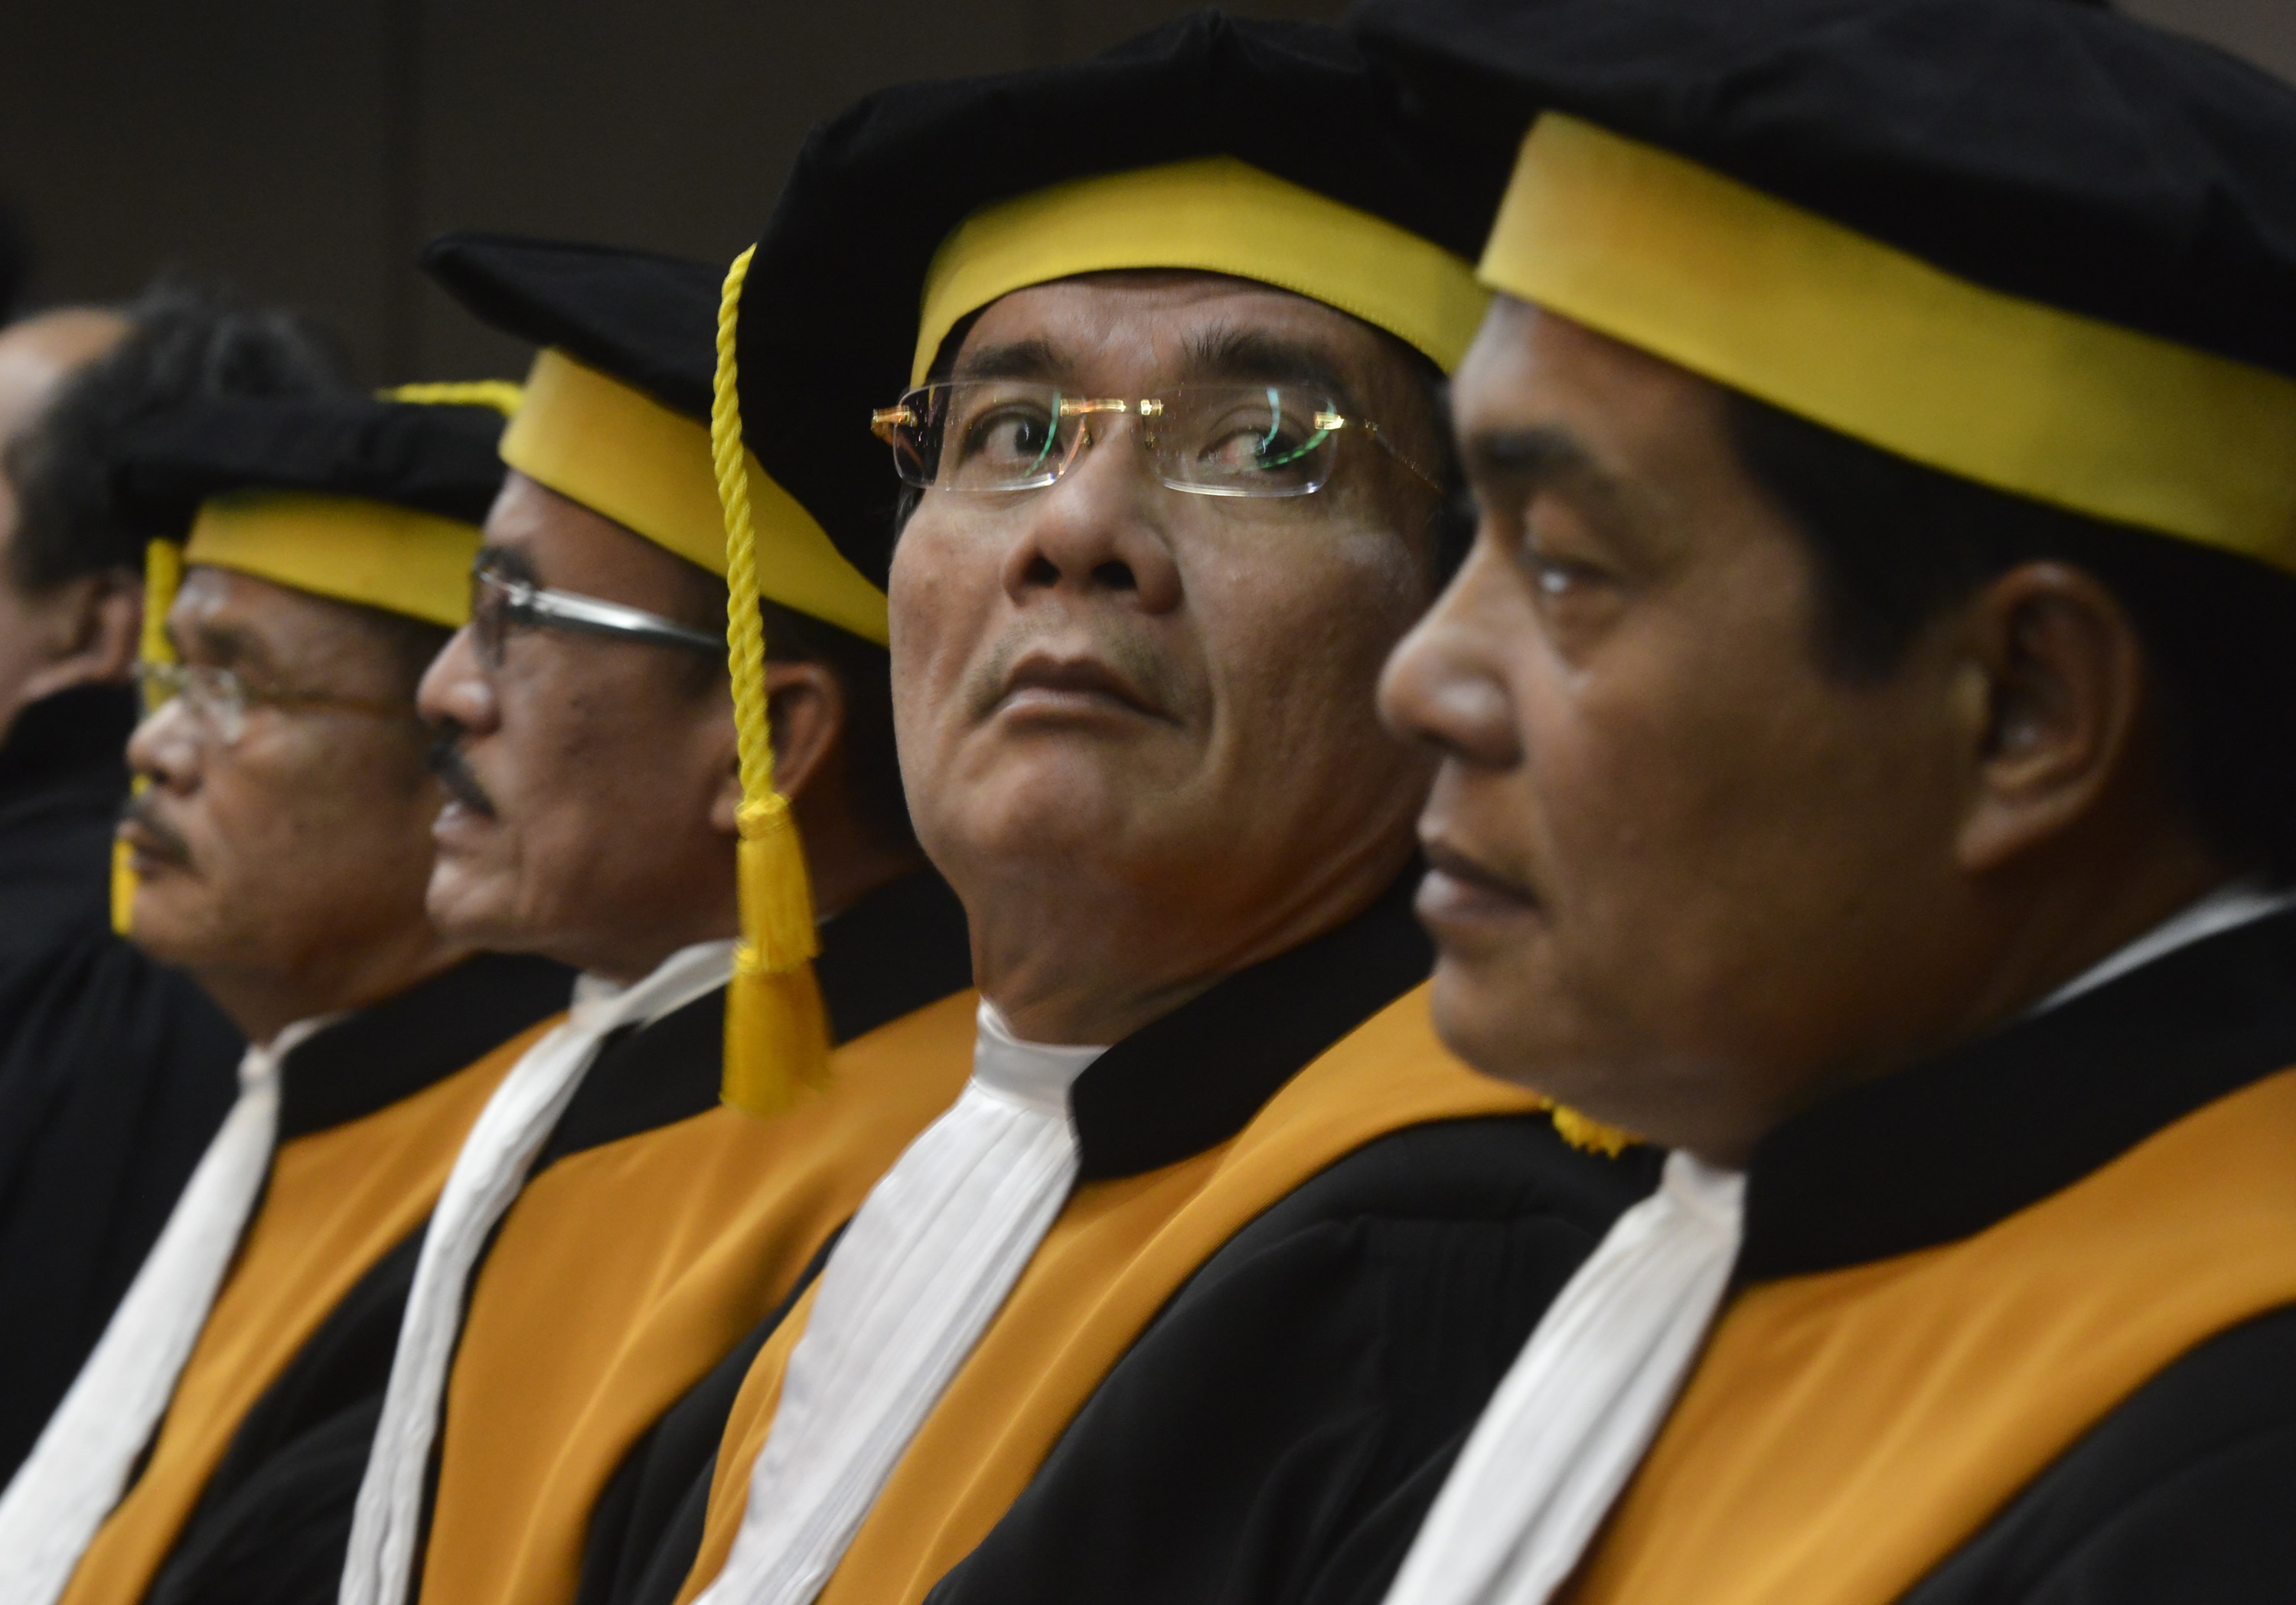 Pengucapan Sumpah dan Pelantikan Hakim Agung di Gedung Mahkamah Konstitusi Jakpus